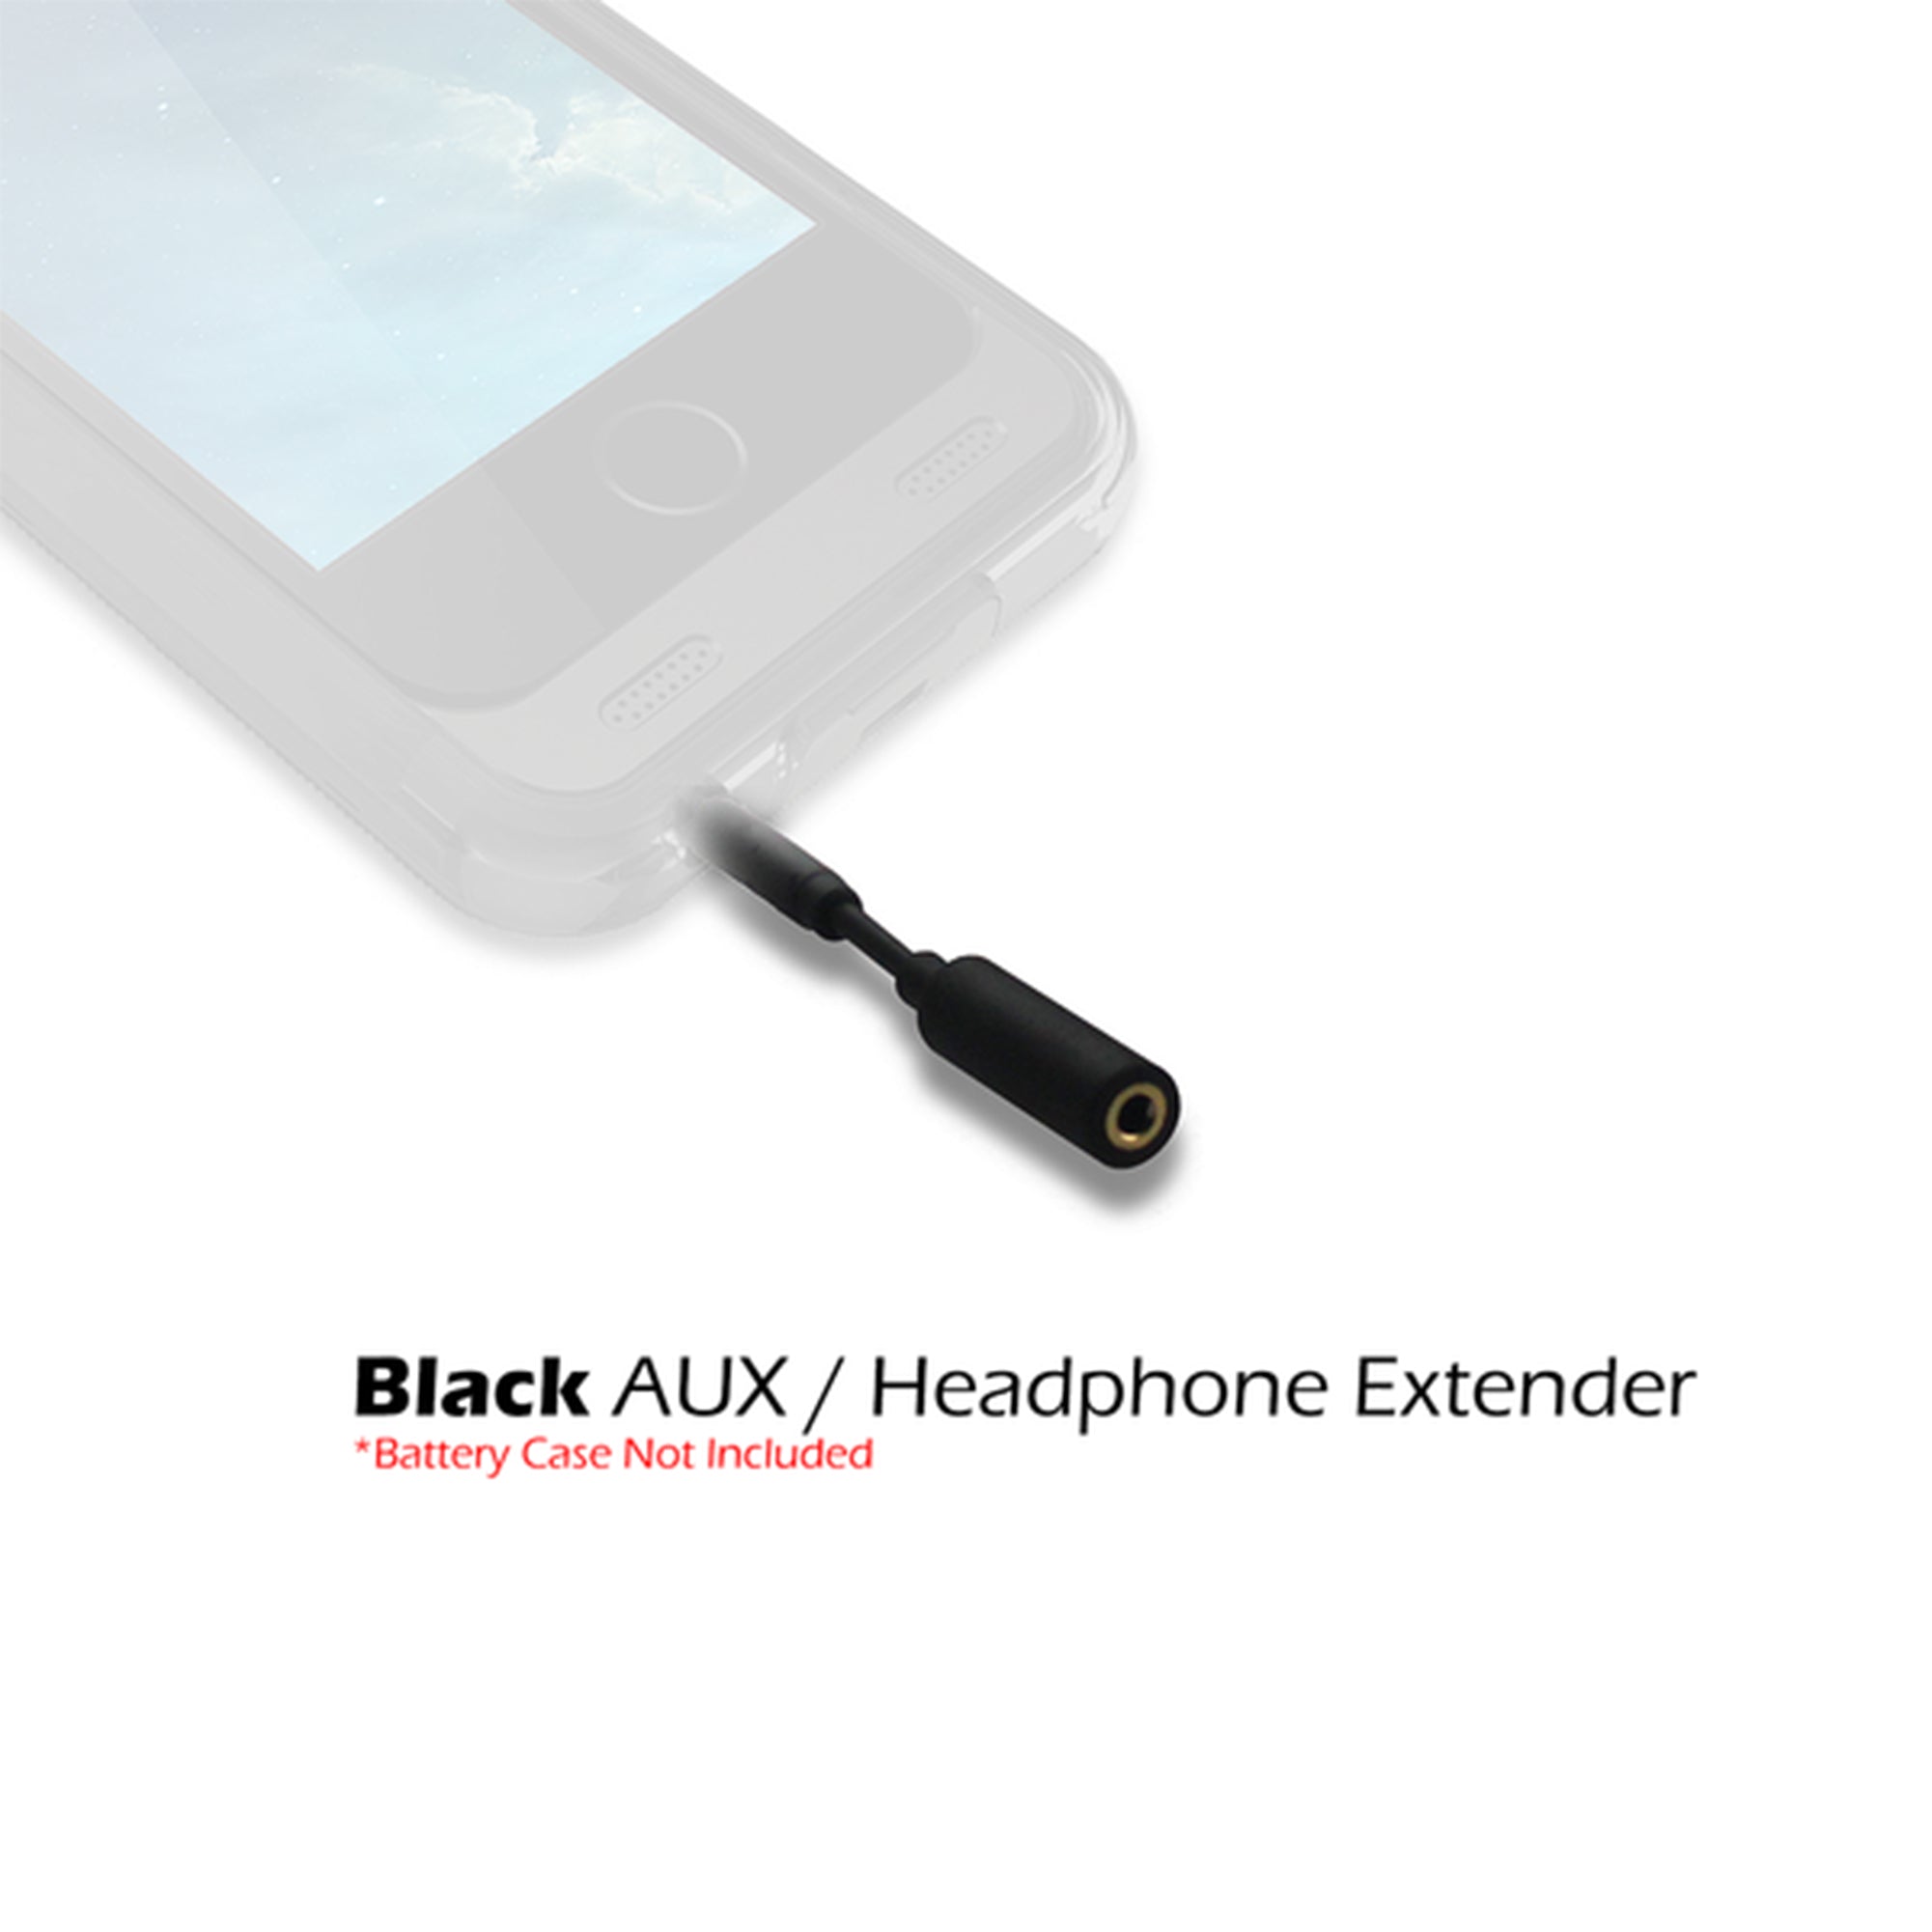 Audio Headphone / AUX Extender Adapter